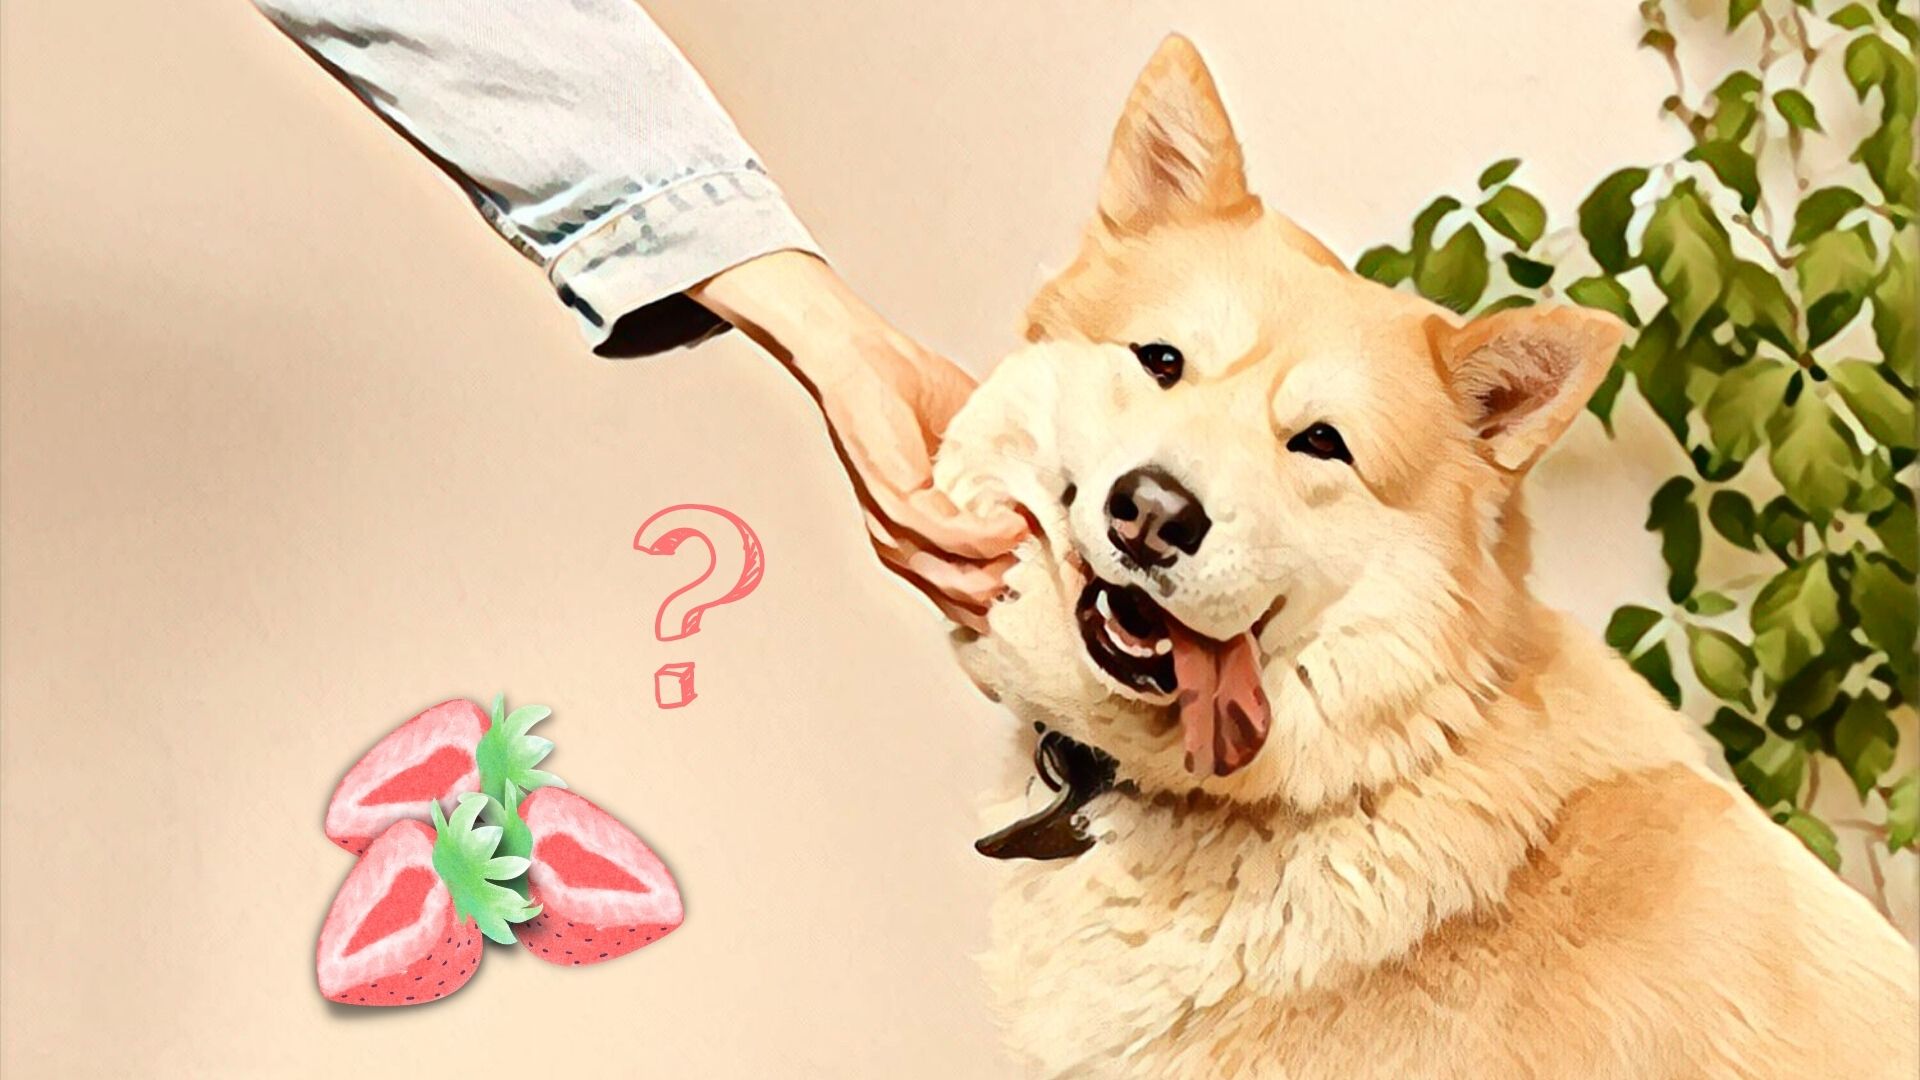 Kan hunde tåle jordbær? - Er Jordbær sikker spise for din